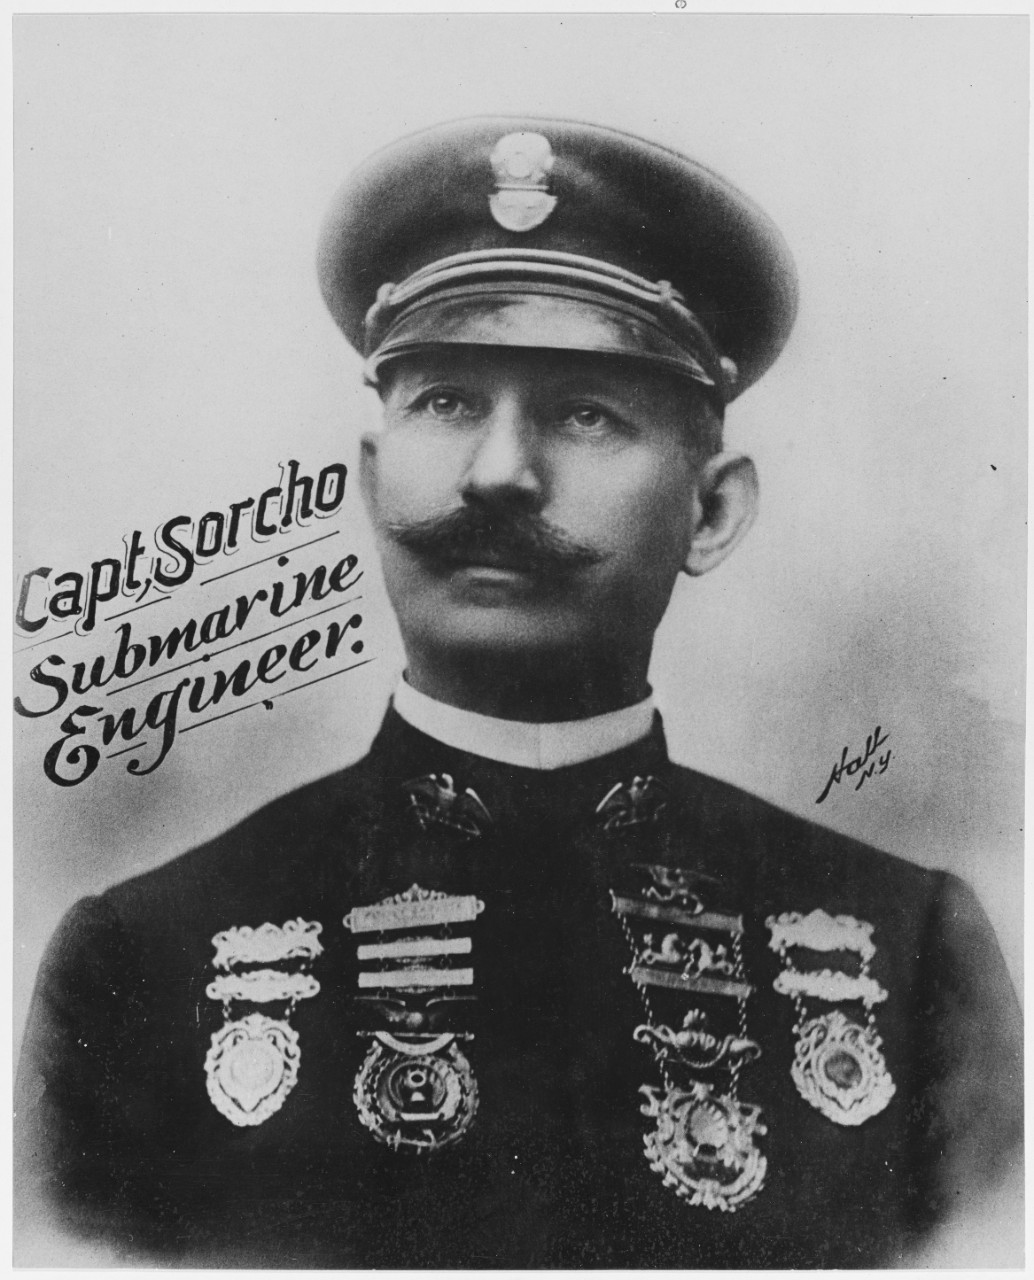 Captain Louis Sorcho, Submarine Engineer